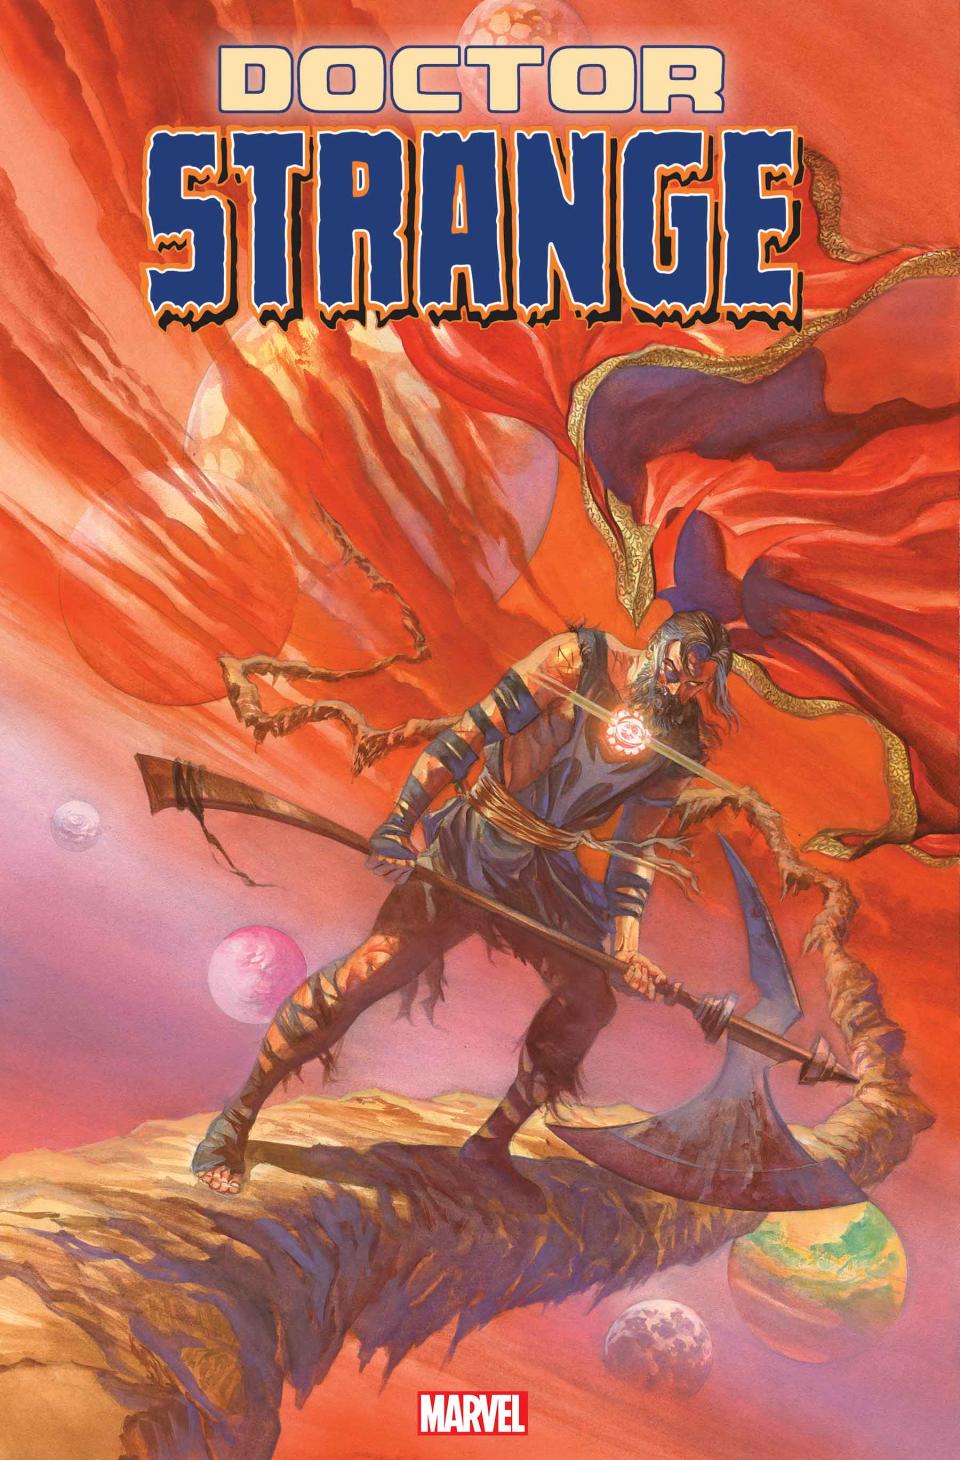 Covers for Dr Strange #6.